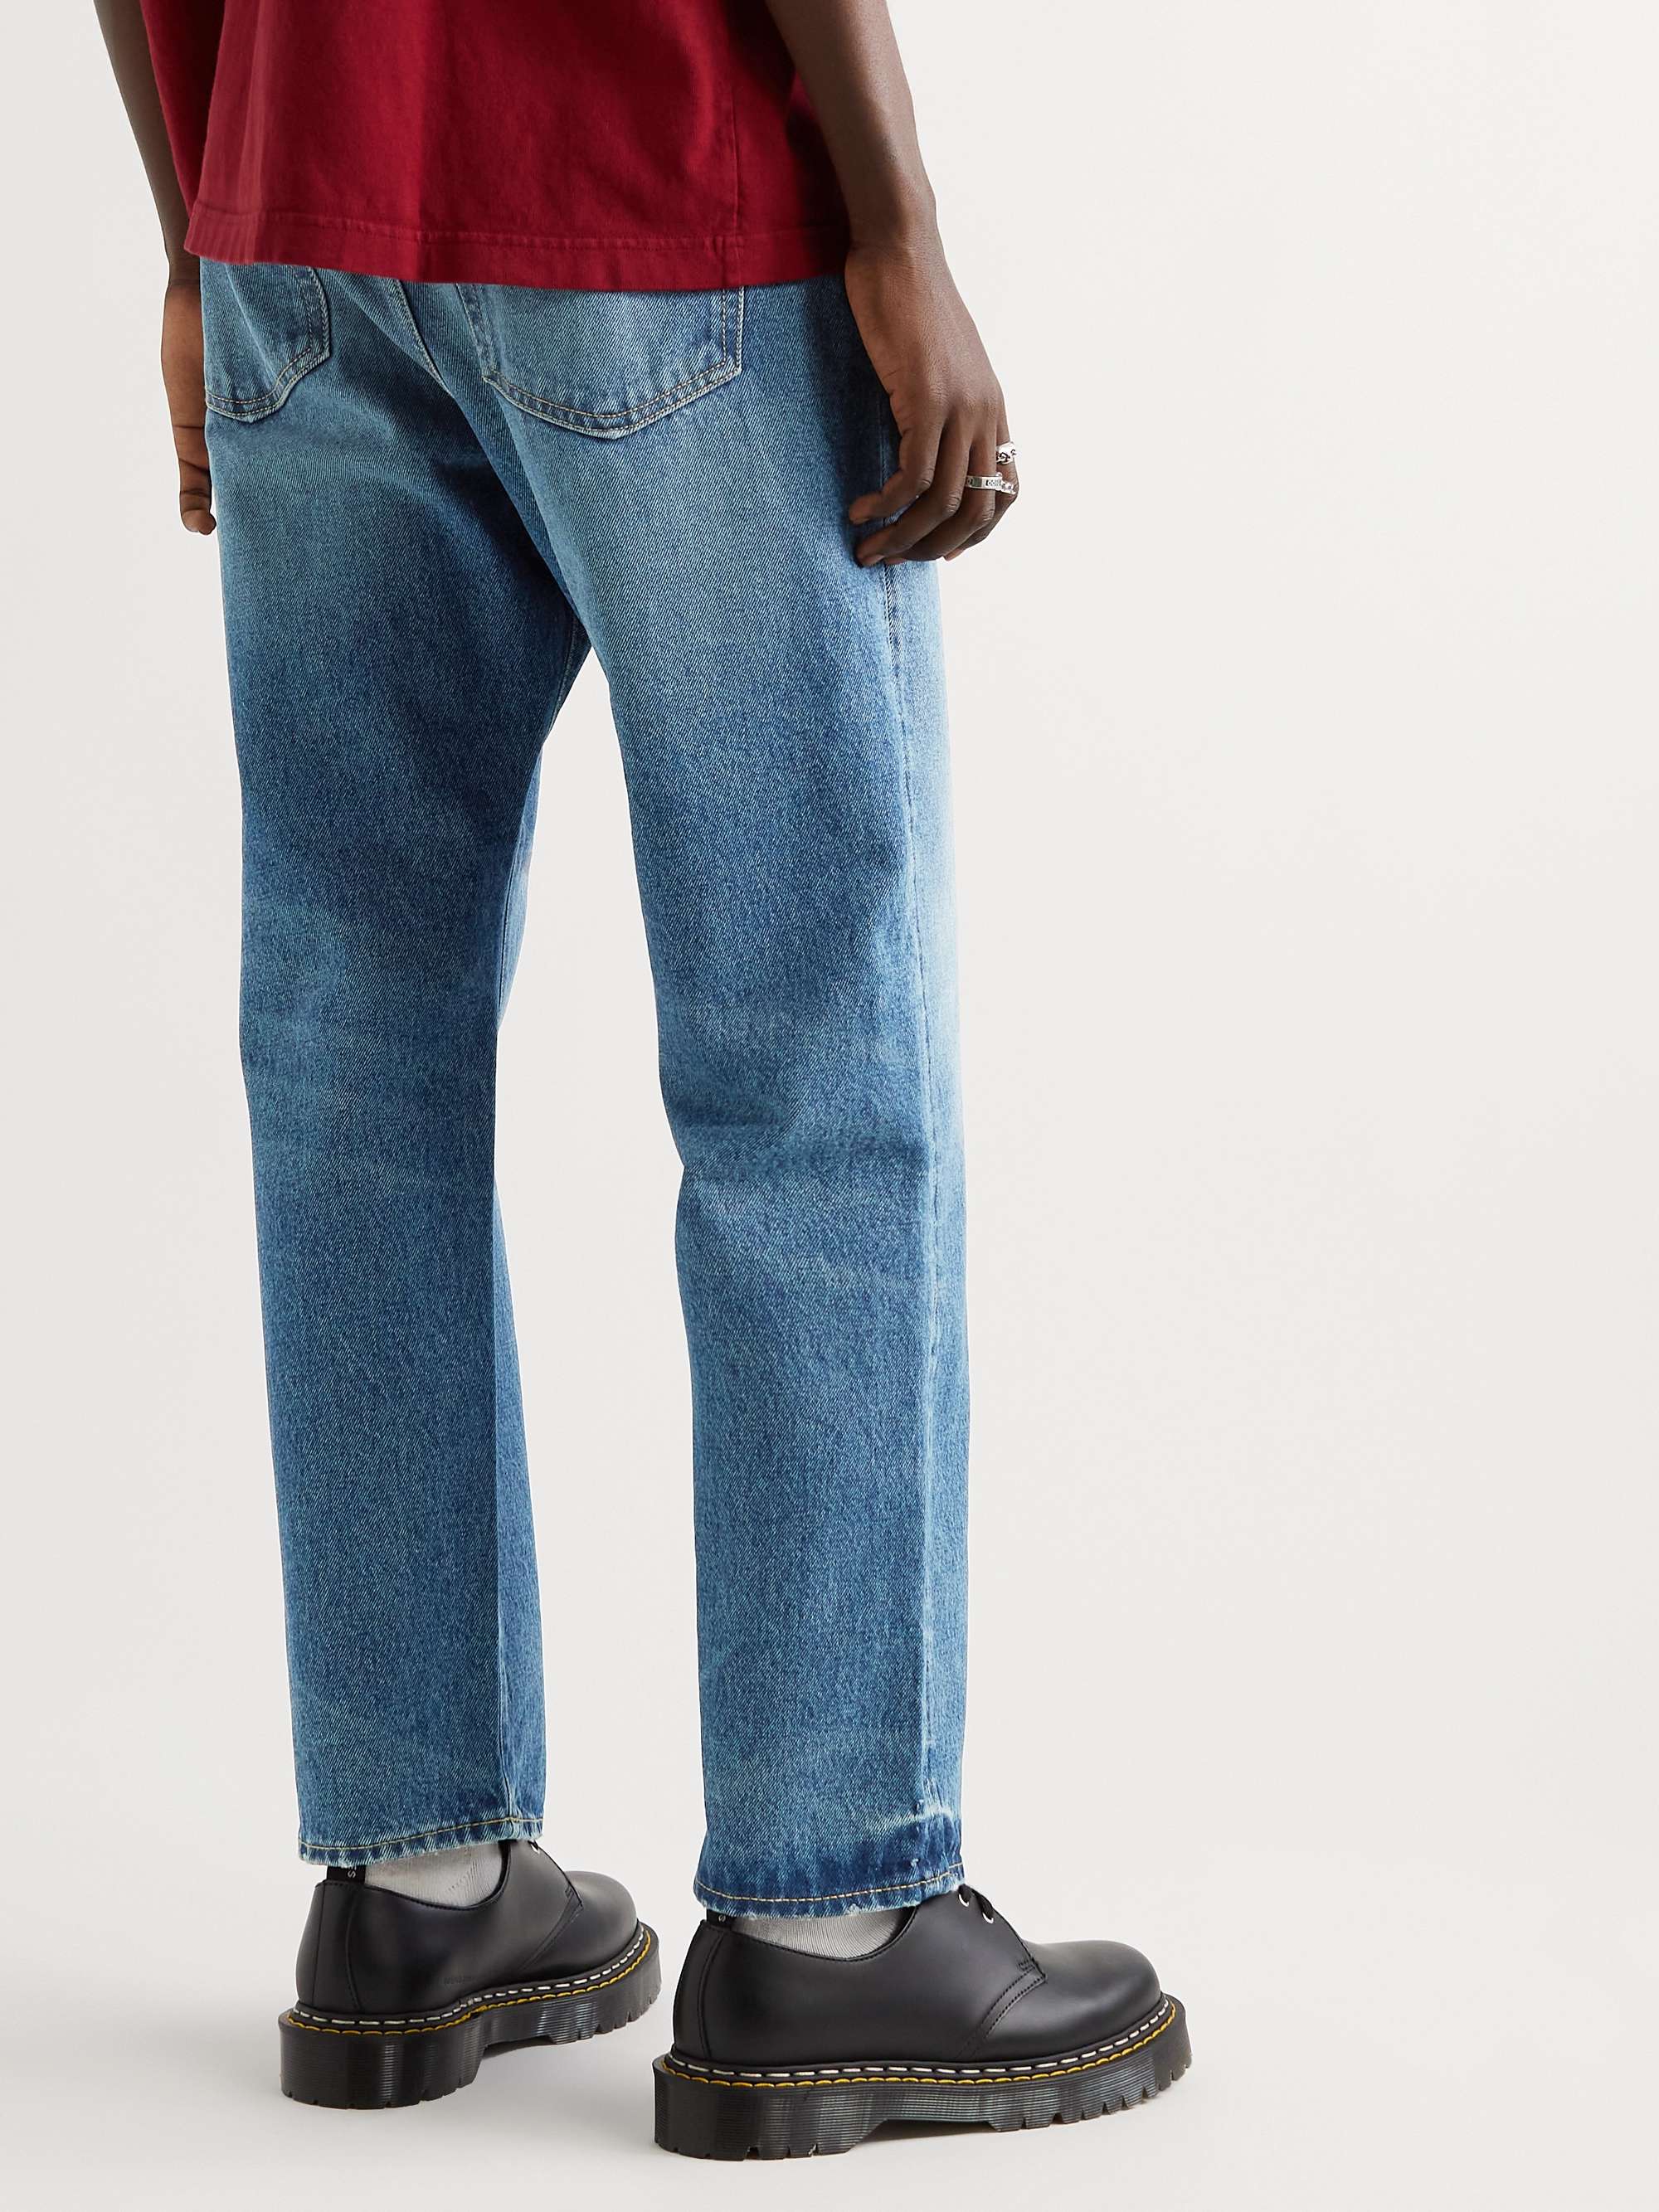 ACNE STUDIOS 2003 Straight-Leg Distressed Jeans for Men | MR PORTER